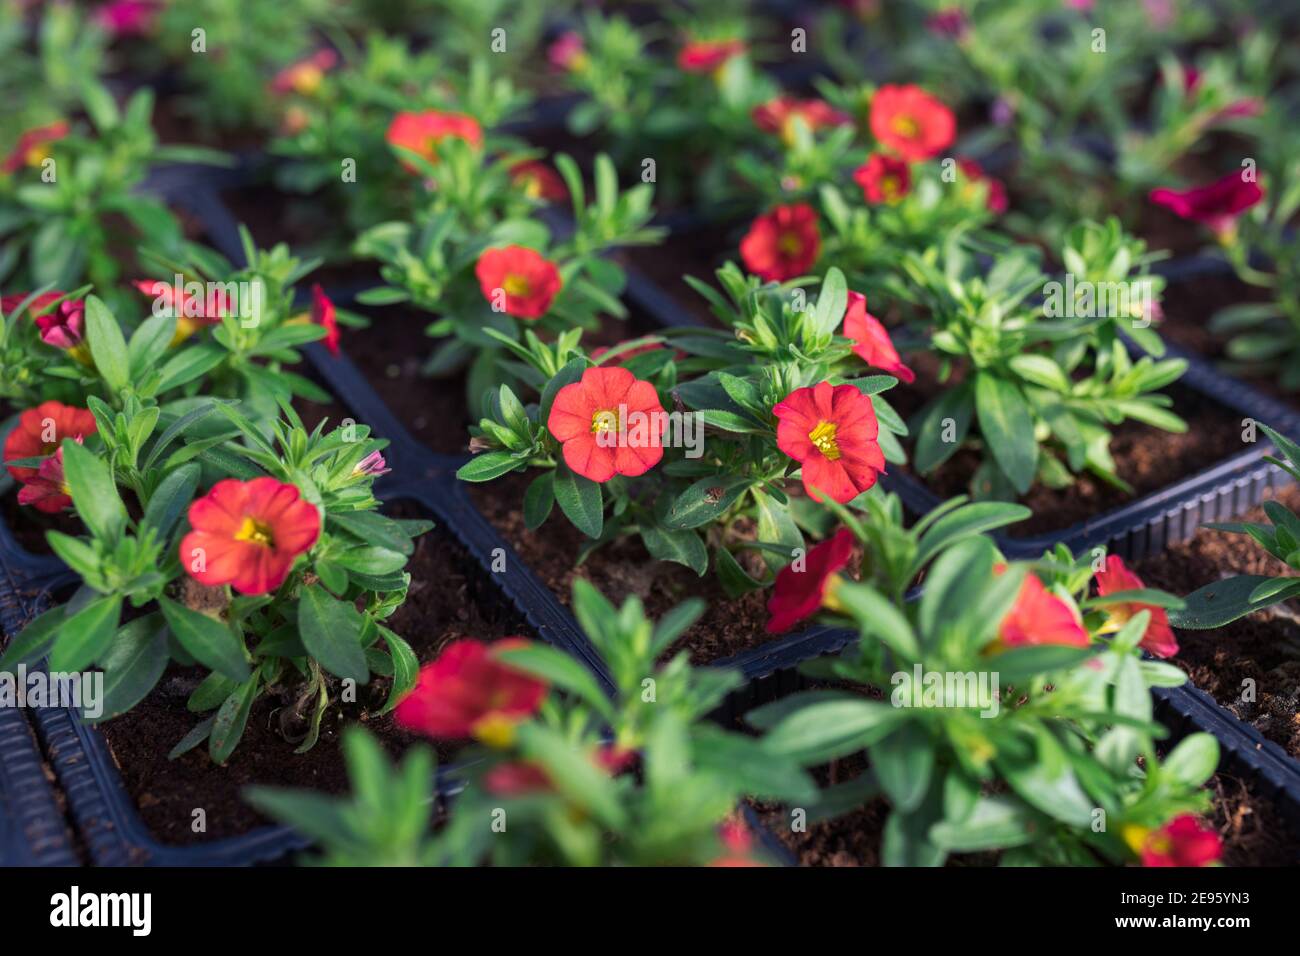 Growing calibrachoa plants in flower pots in greenhouse Stock Photo